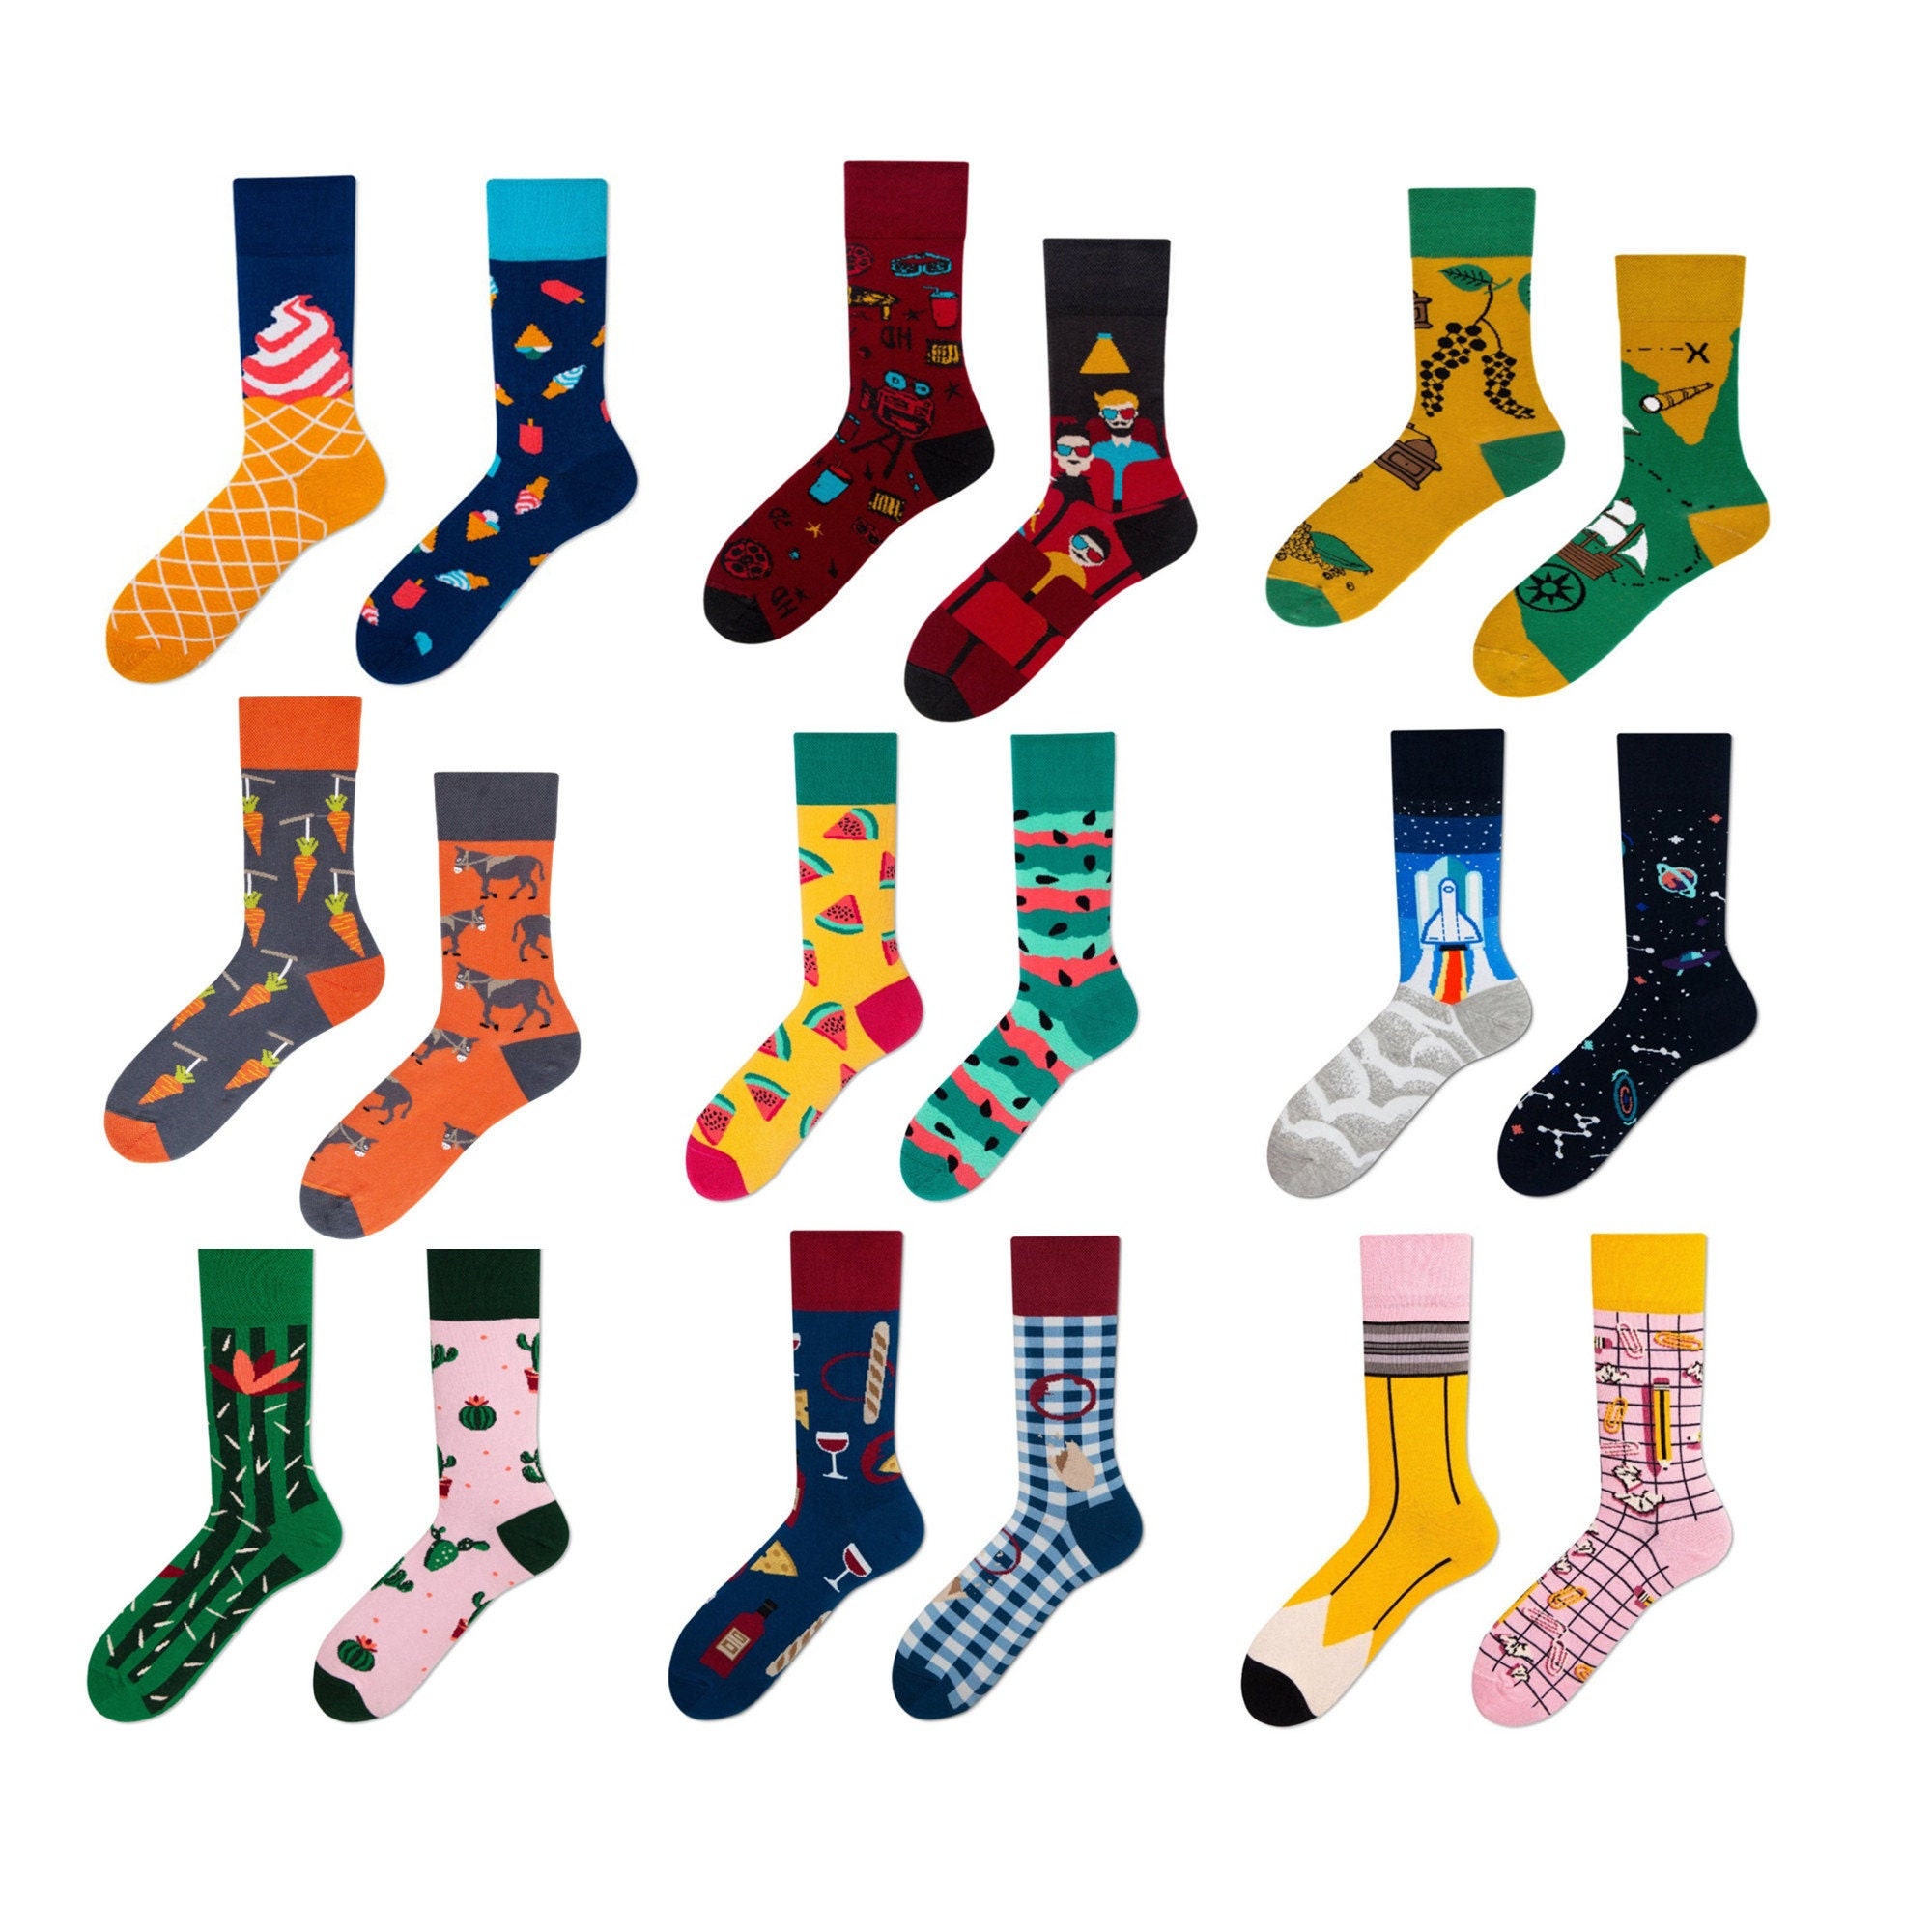 Mismatched socks Couple style cute socks Gift Socks | Etsy